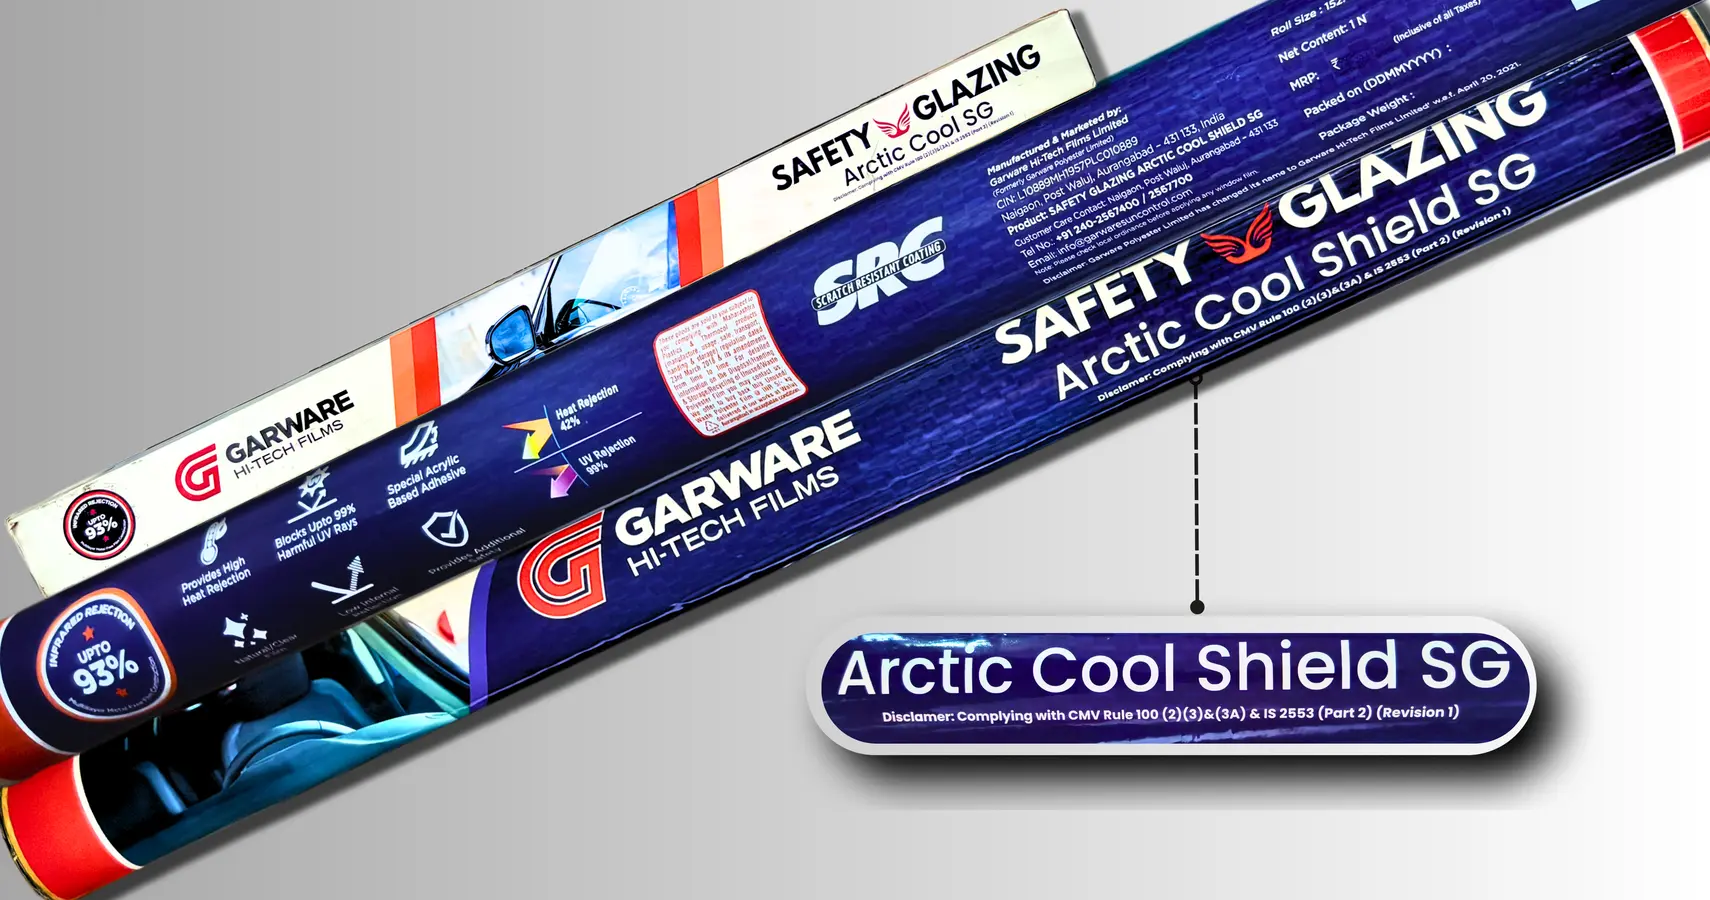 garware-ice-cool-vs-arctic-cool